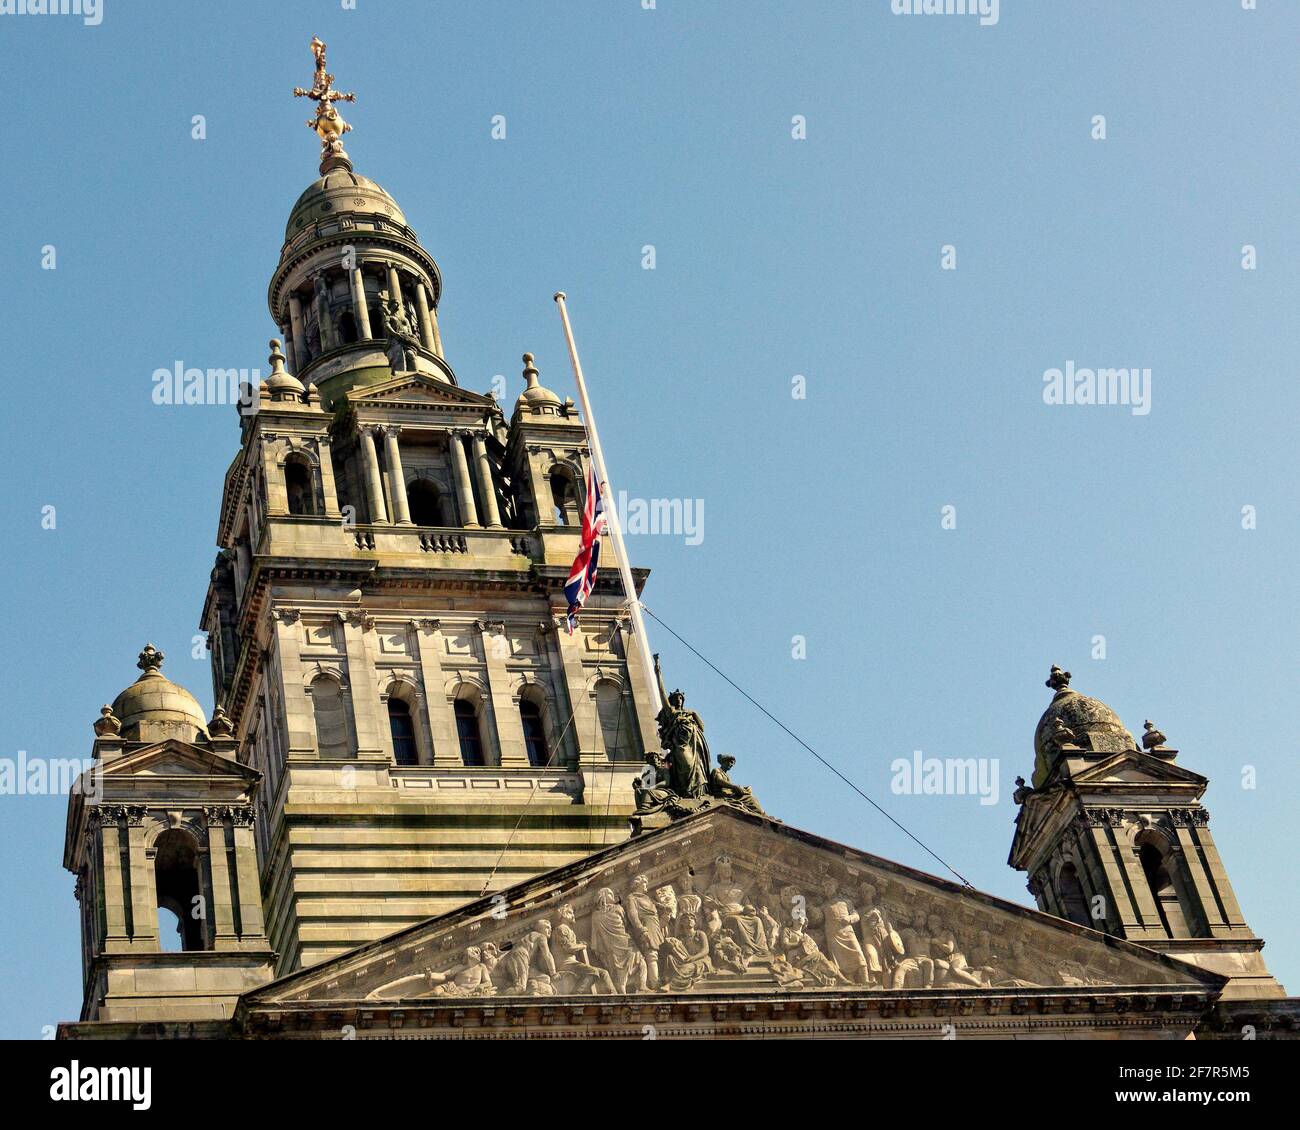 Glasgow, Scotland, UK. 9th Apr, 2021. Duke of edinburgh passing away saw flags at half mast at u the city chambers of george square. Credit: gerard ferry/Alamy Live News Stock Photo